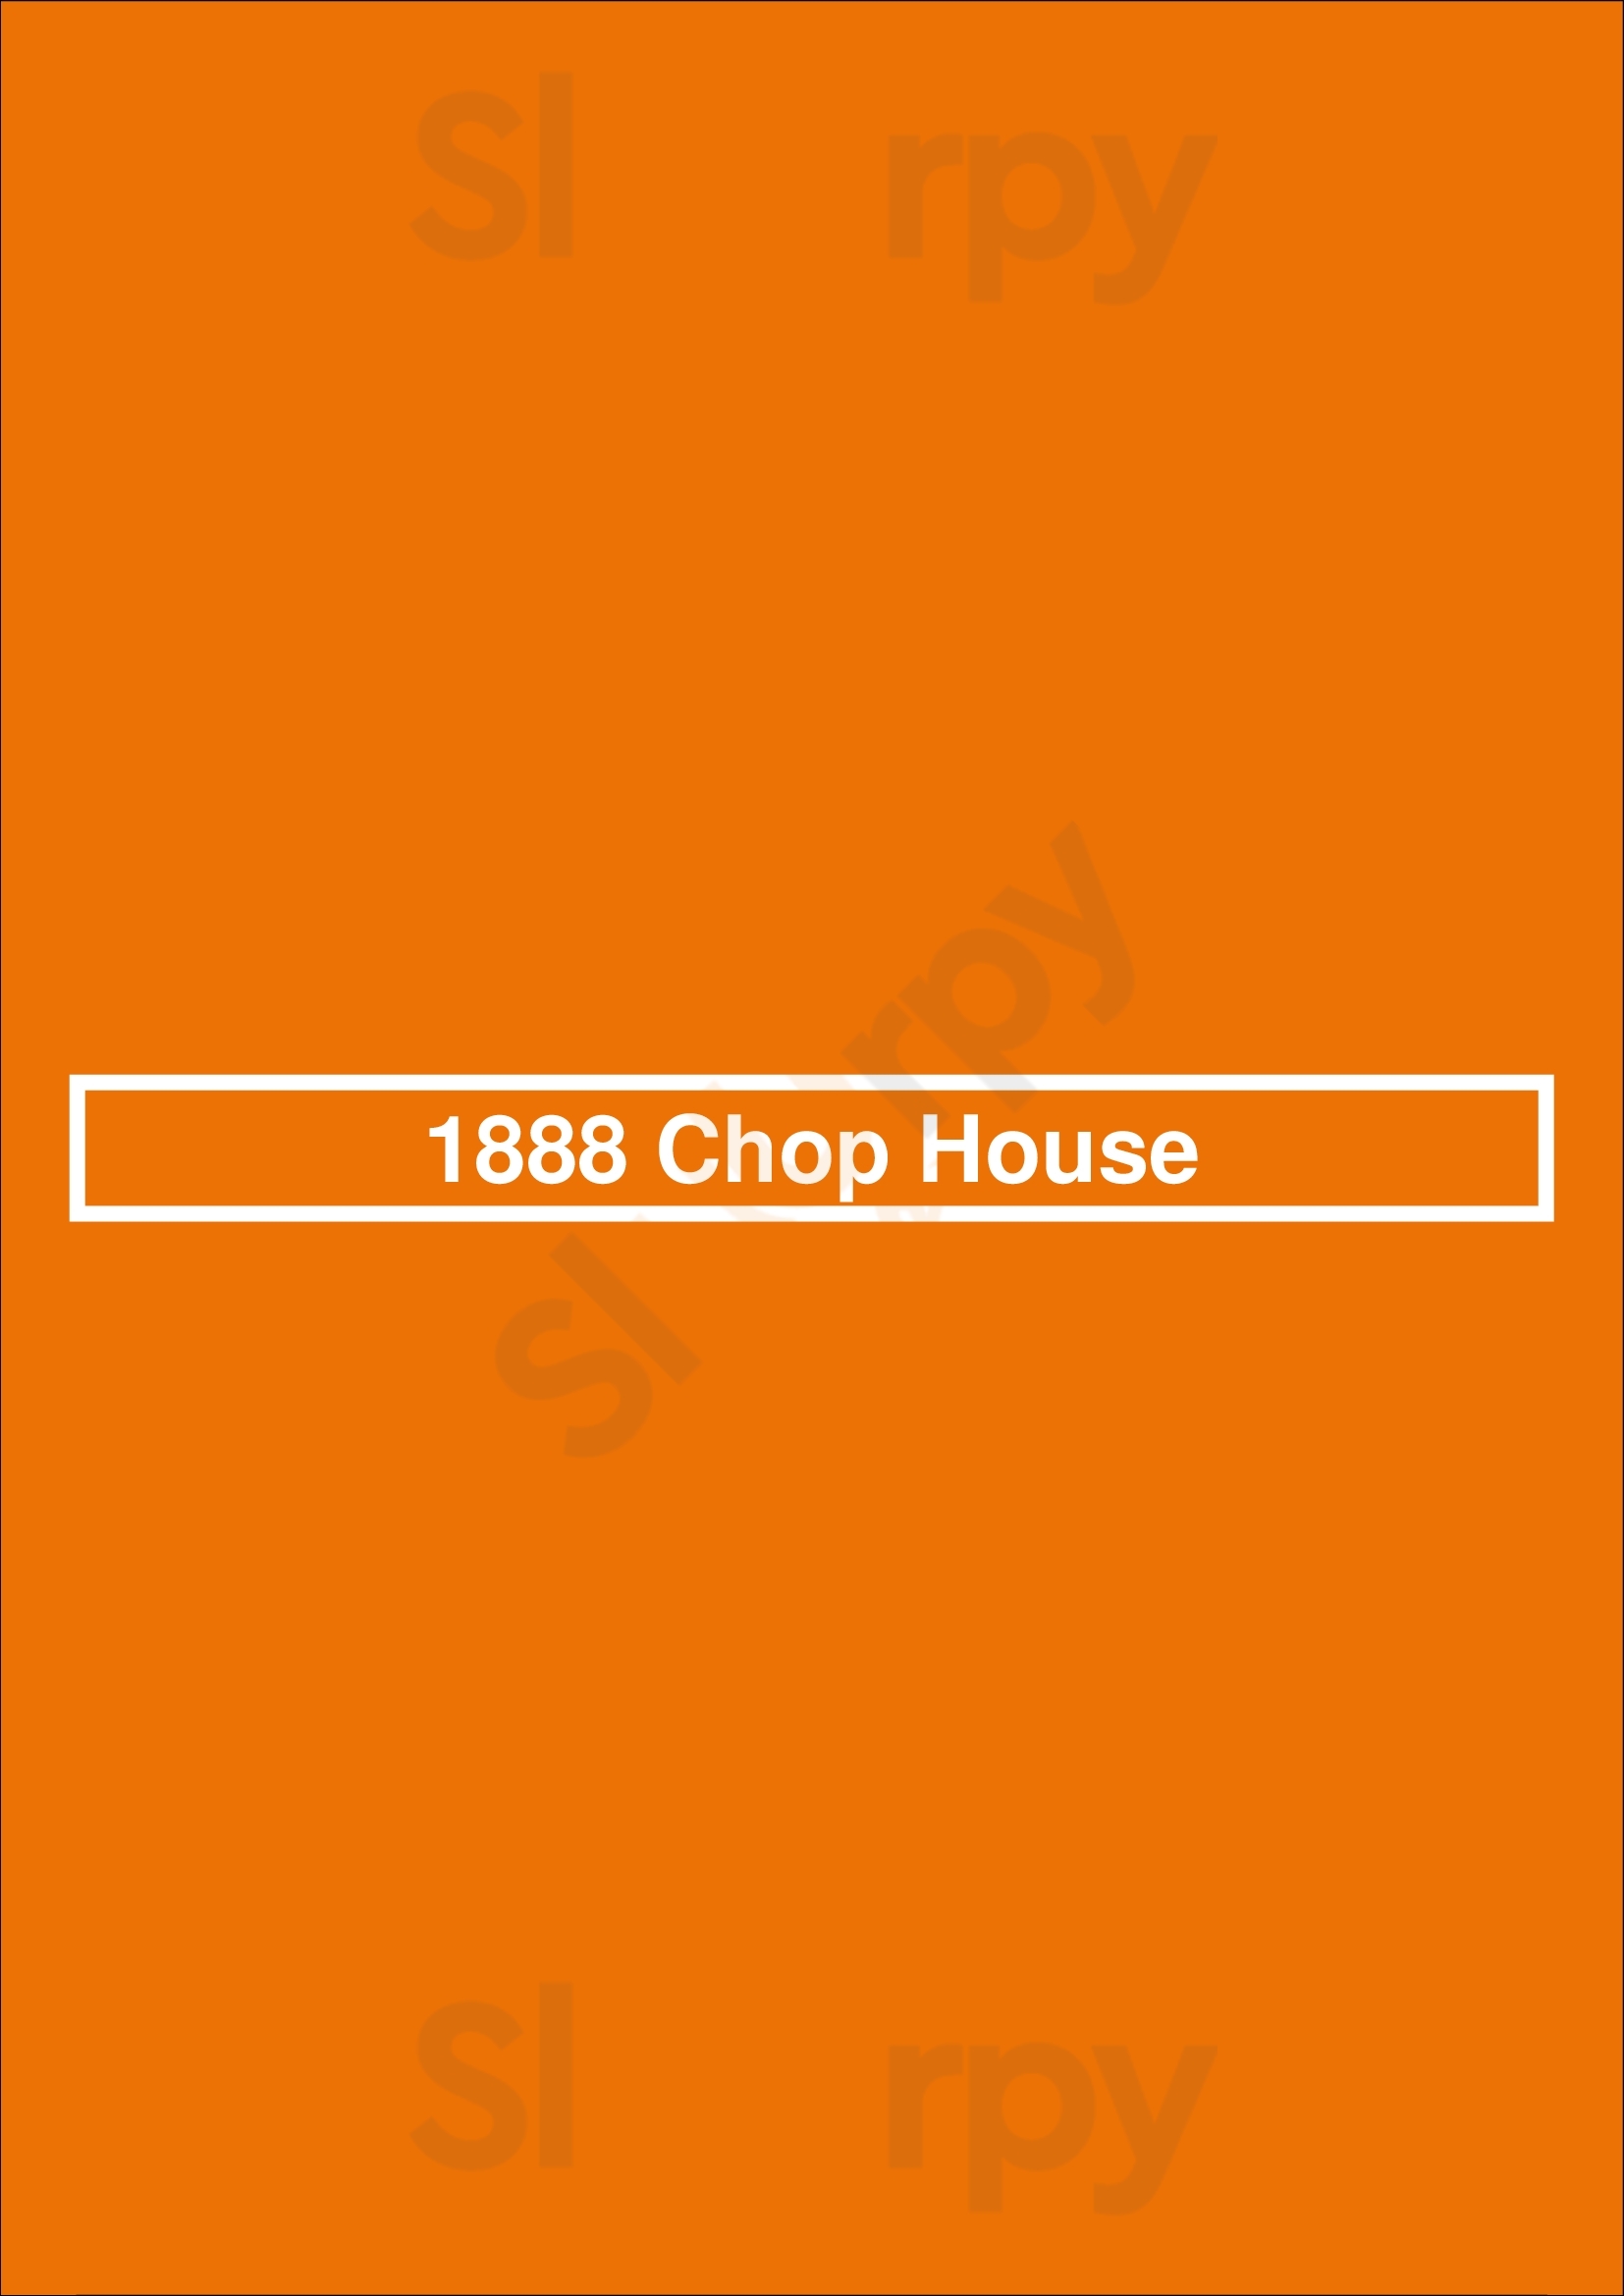 1888 Chop House Banff Menu - 1